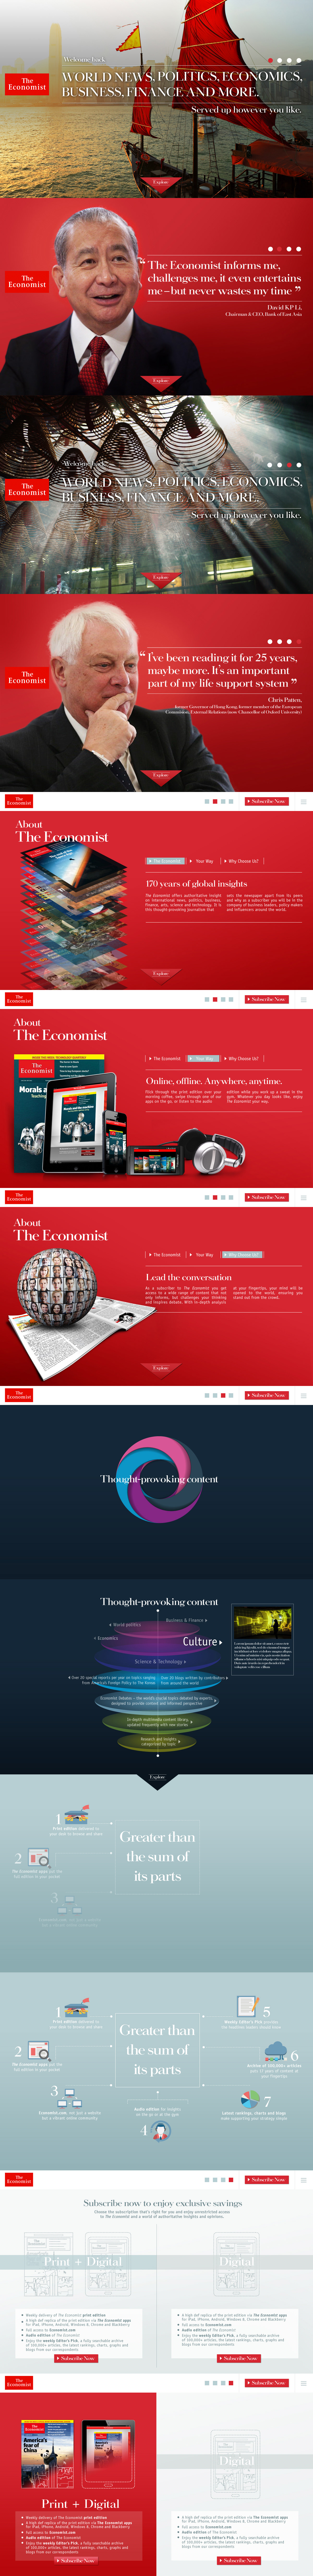 The Economist asia Hong Kong ogilvy agency campaign digital campaign